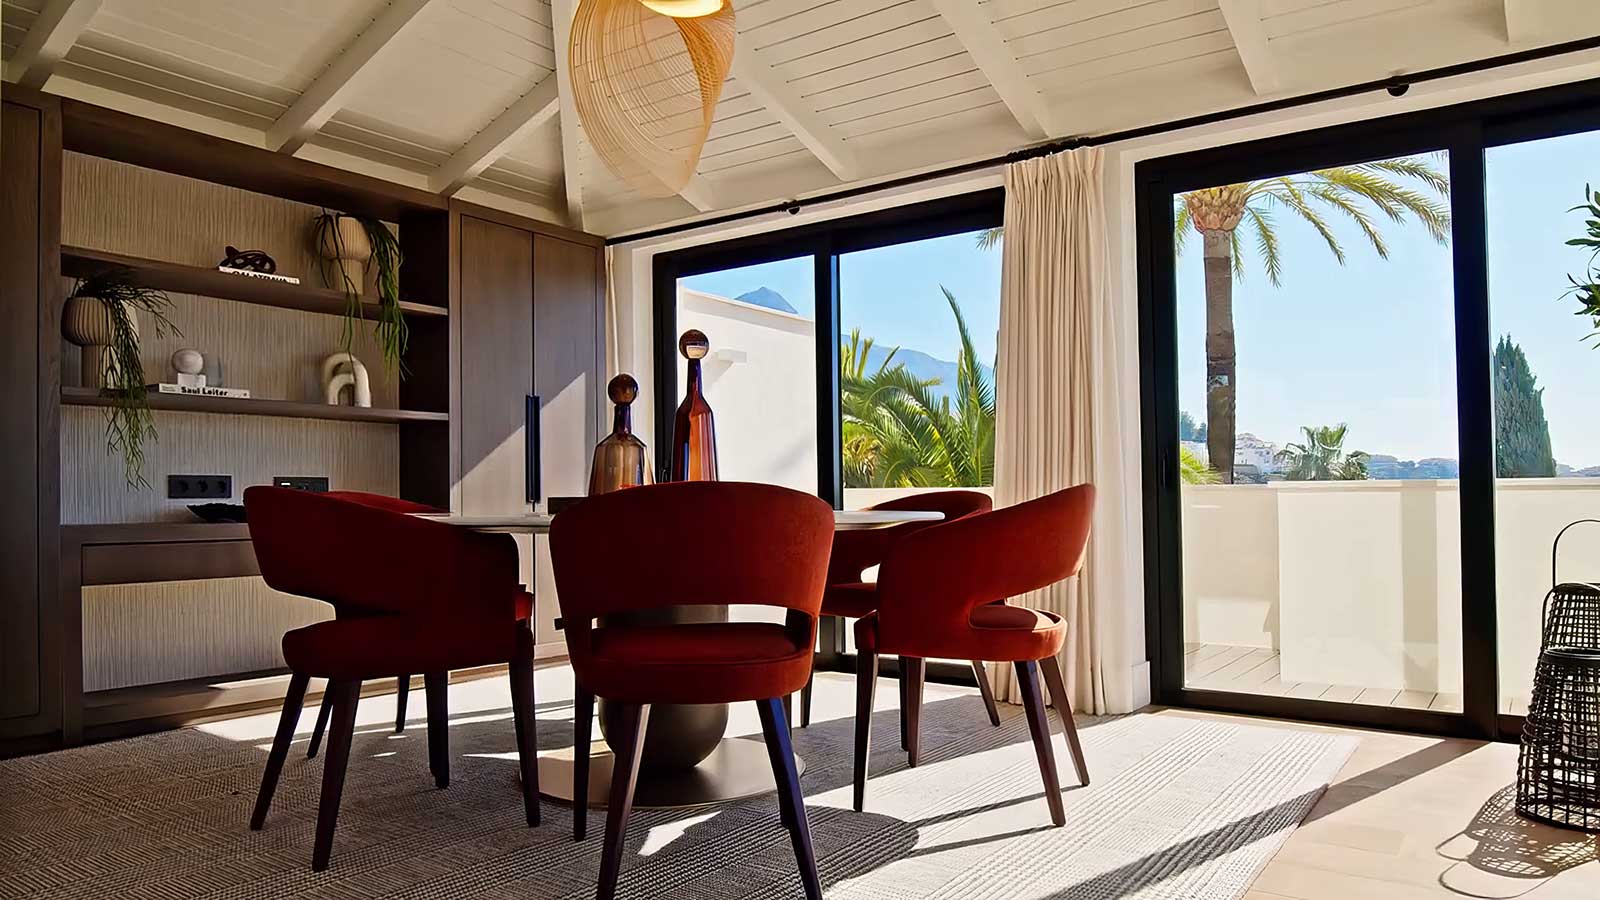 Luxury interiors of Villa Seraphina in Los Naranjos Hill Club, Marbella, featuring elegant furnishings and stylish design